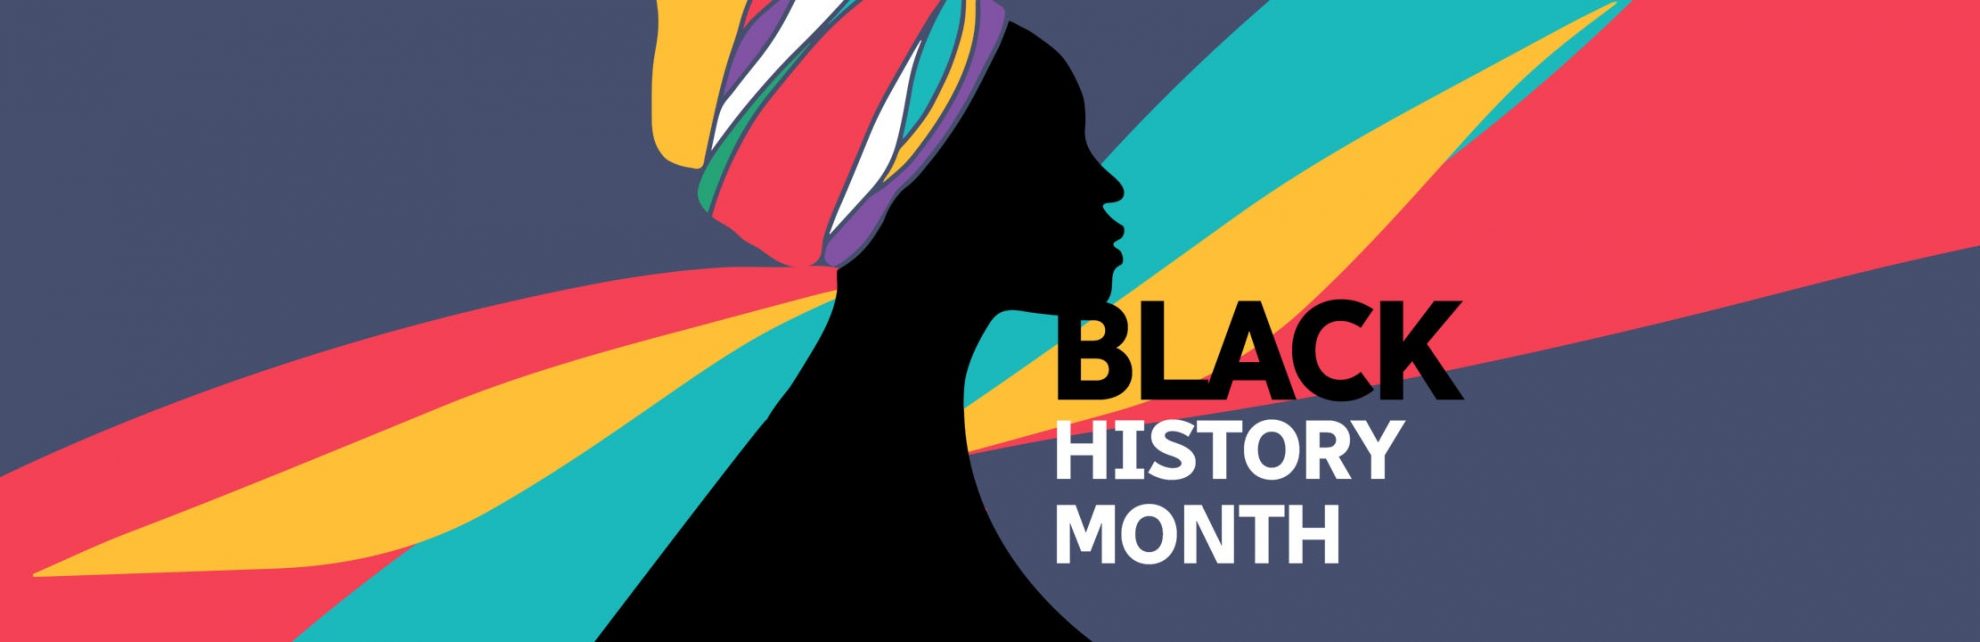 Black History Month – Feb 2021